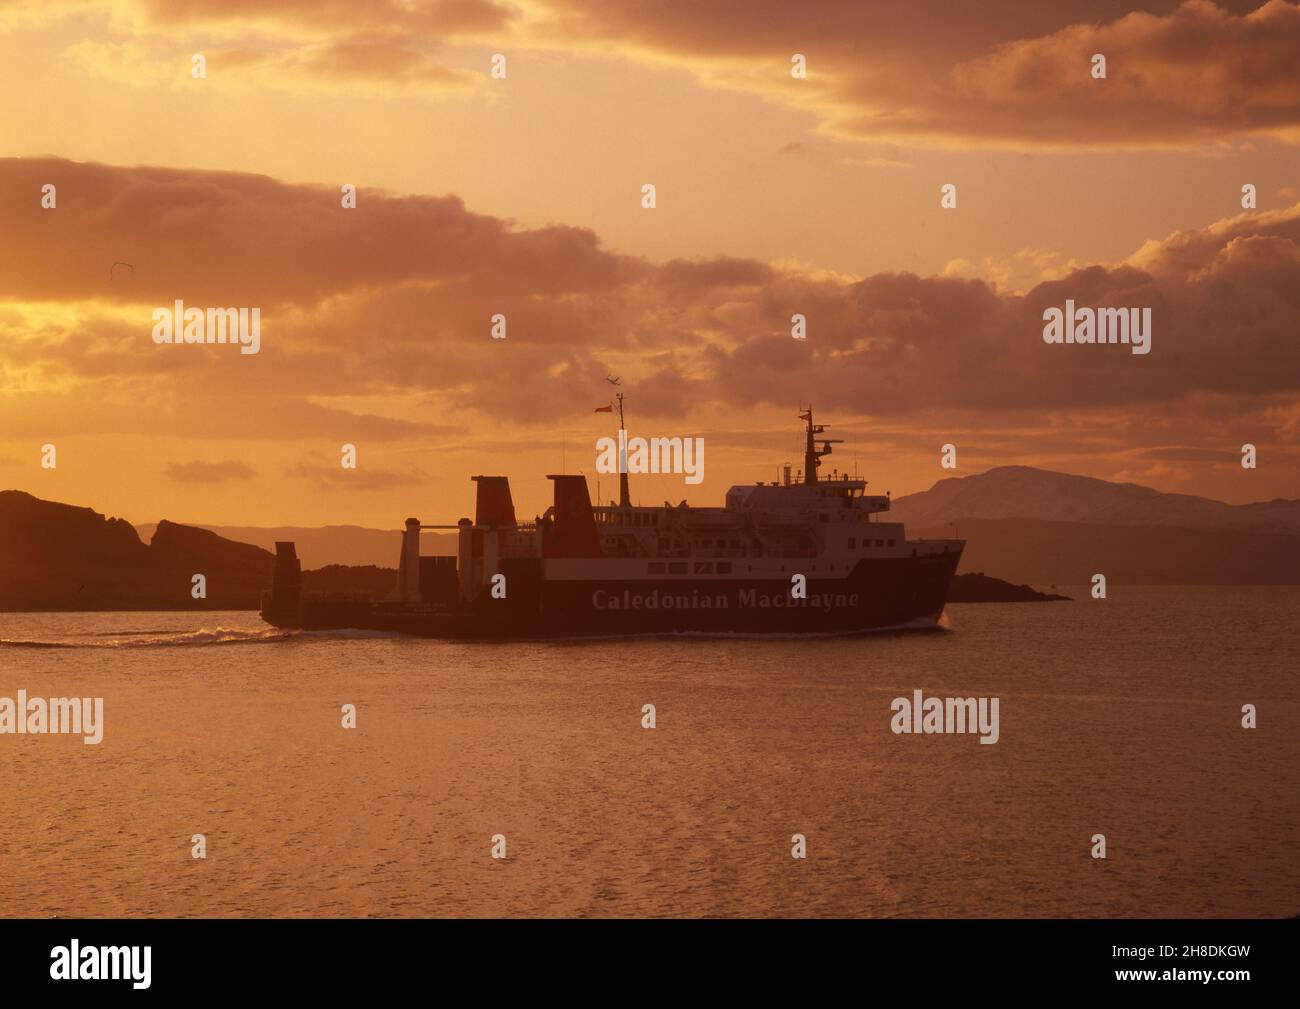 Calmac vessel MV hebridean Isles at sunset. Stock Photo